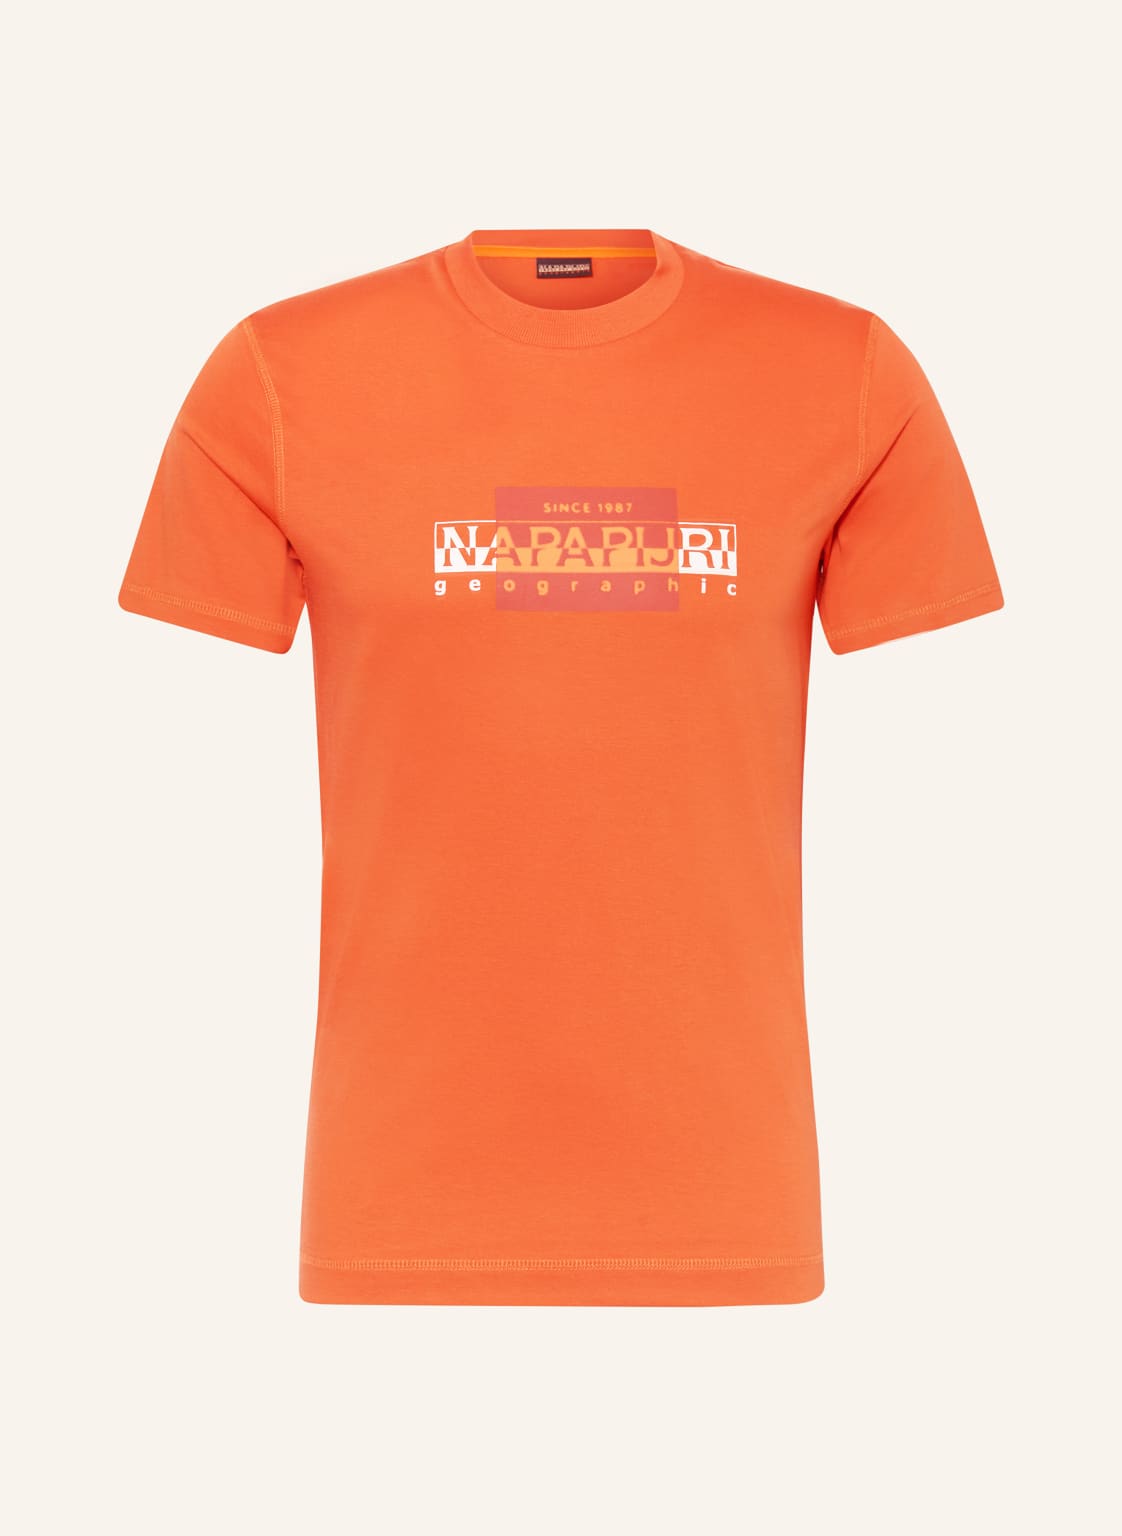 Napapijri T-Shirt Smallwood orange von Napapijri